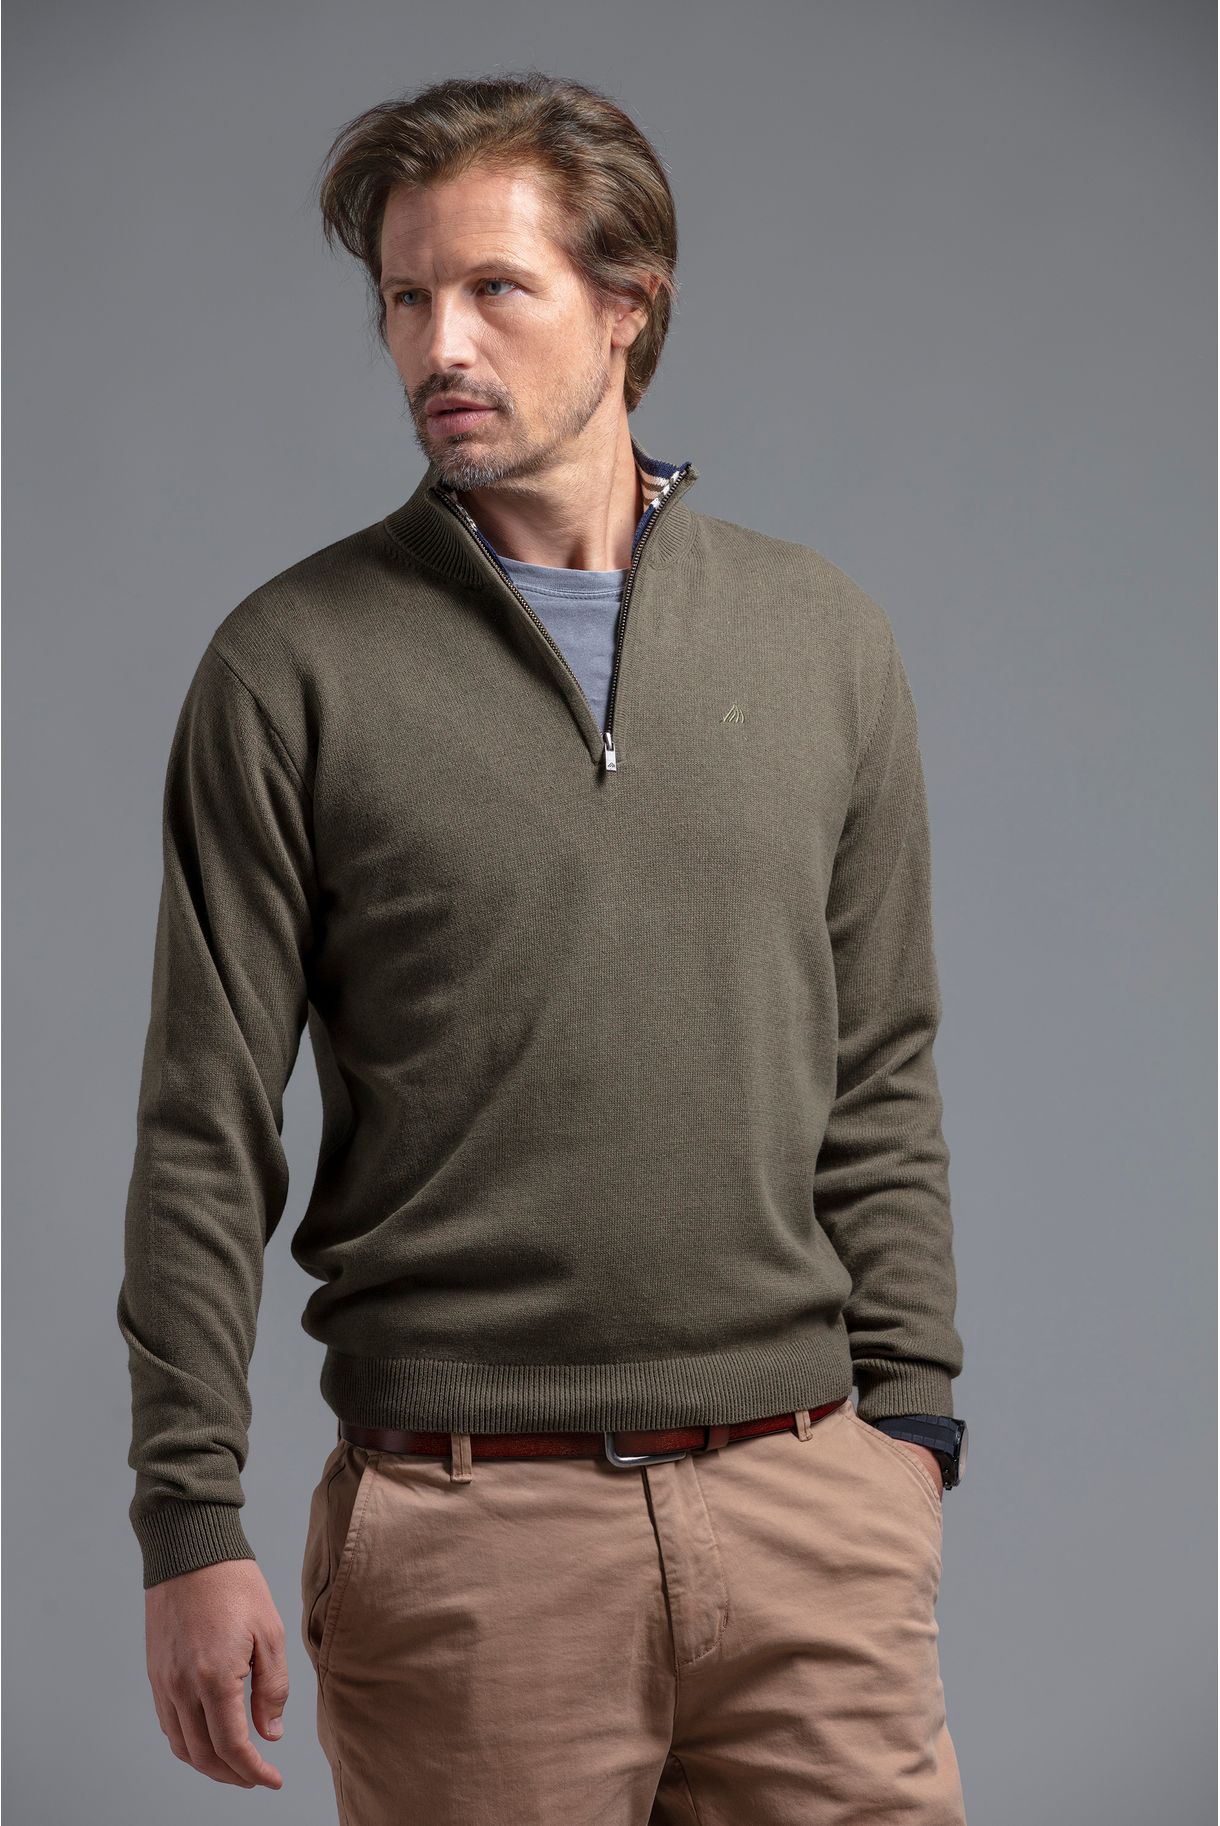 Half collar sweater with zipper